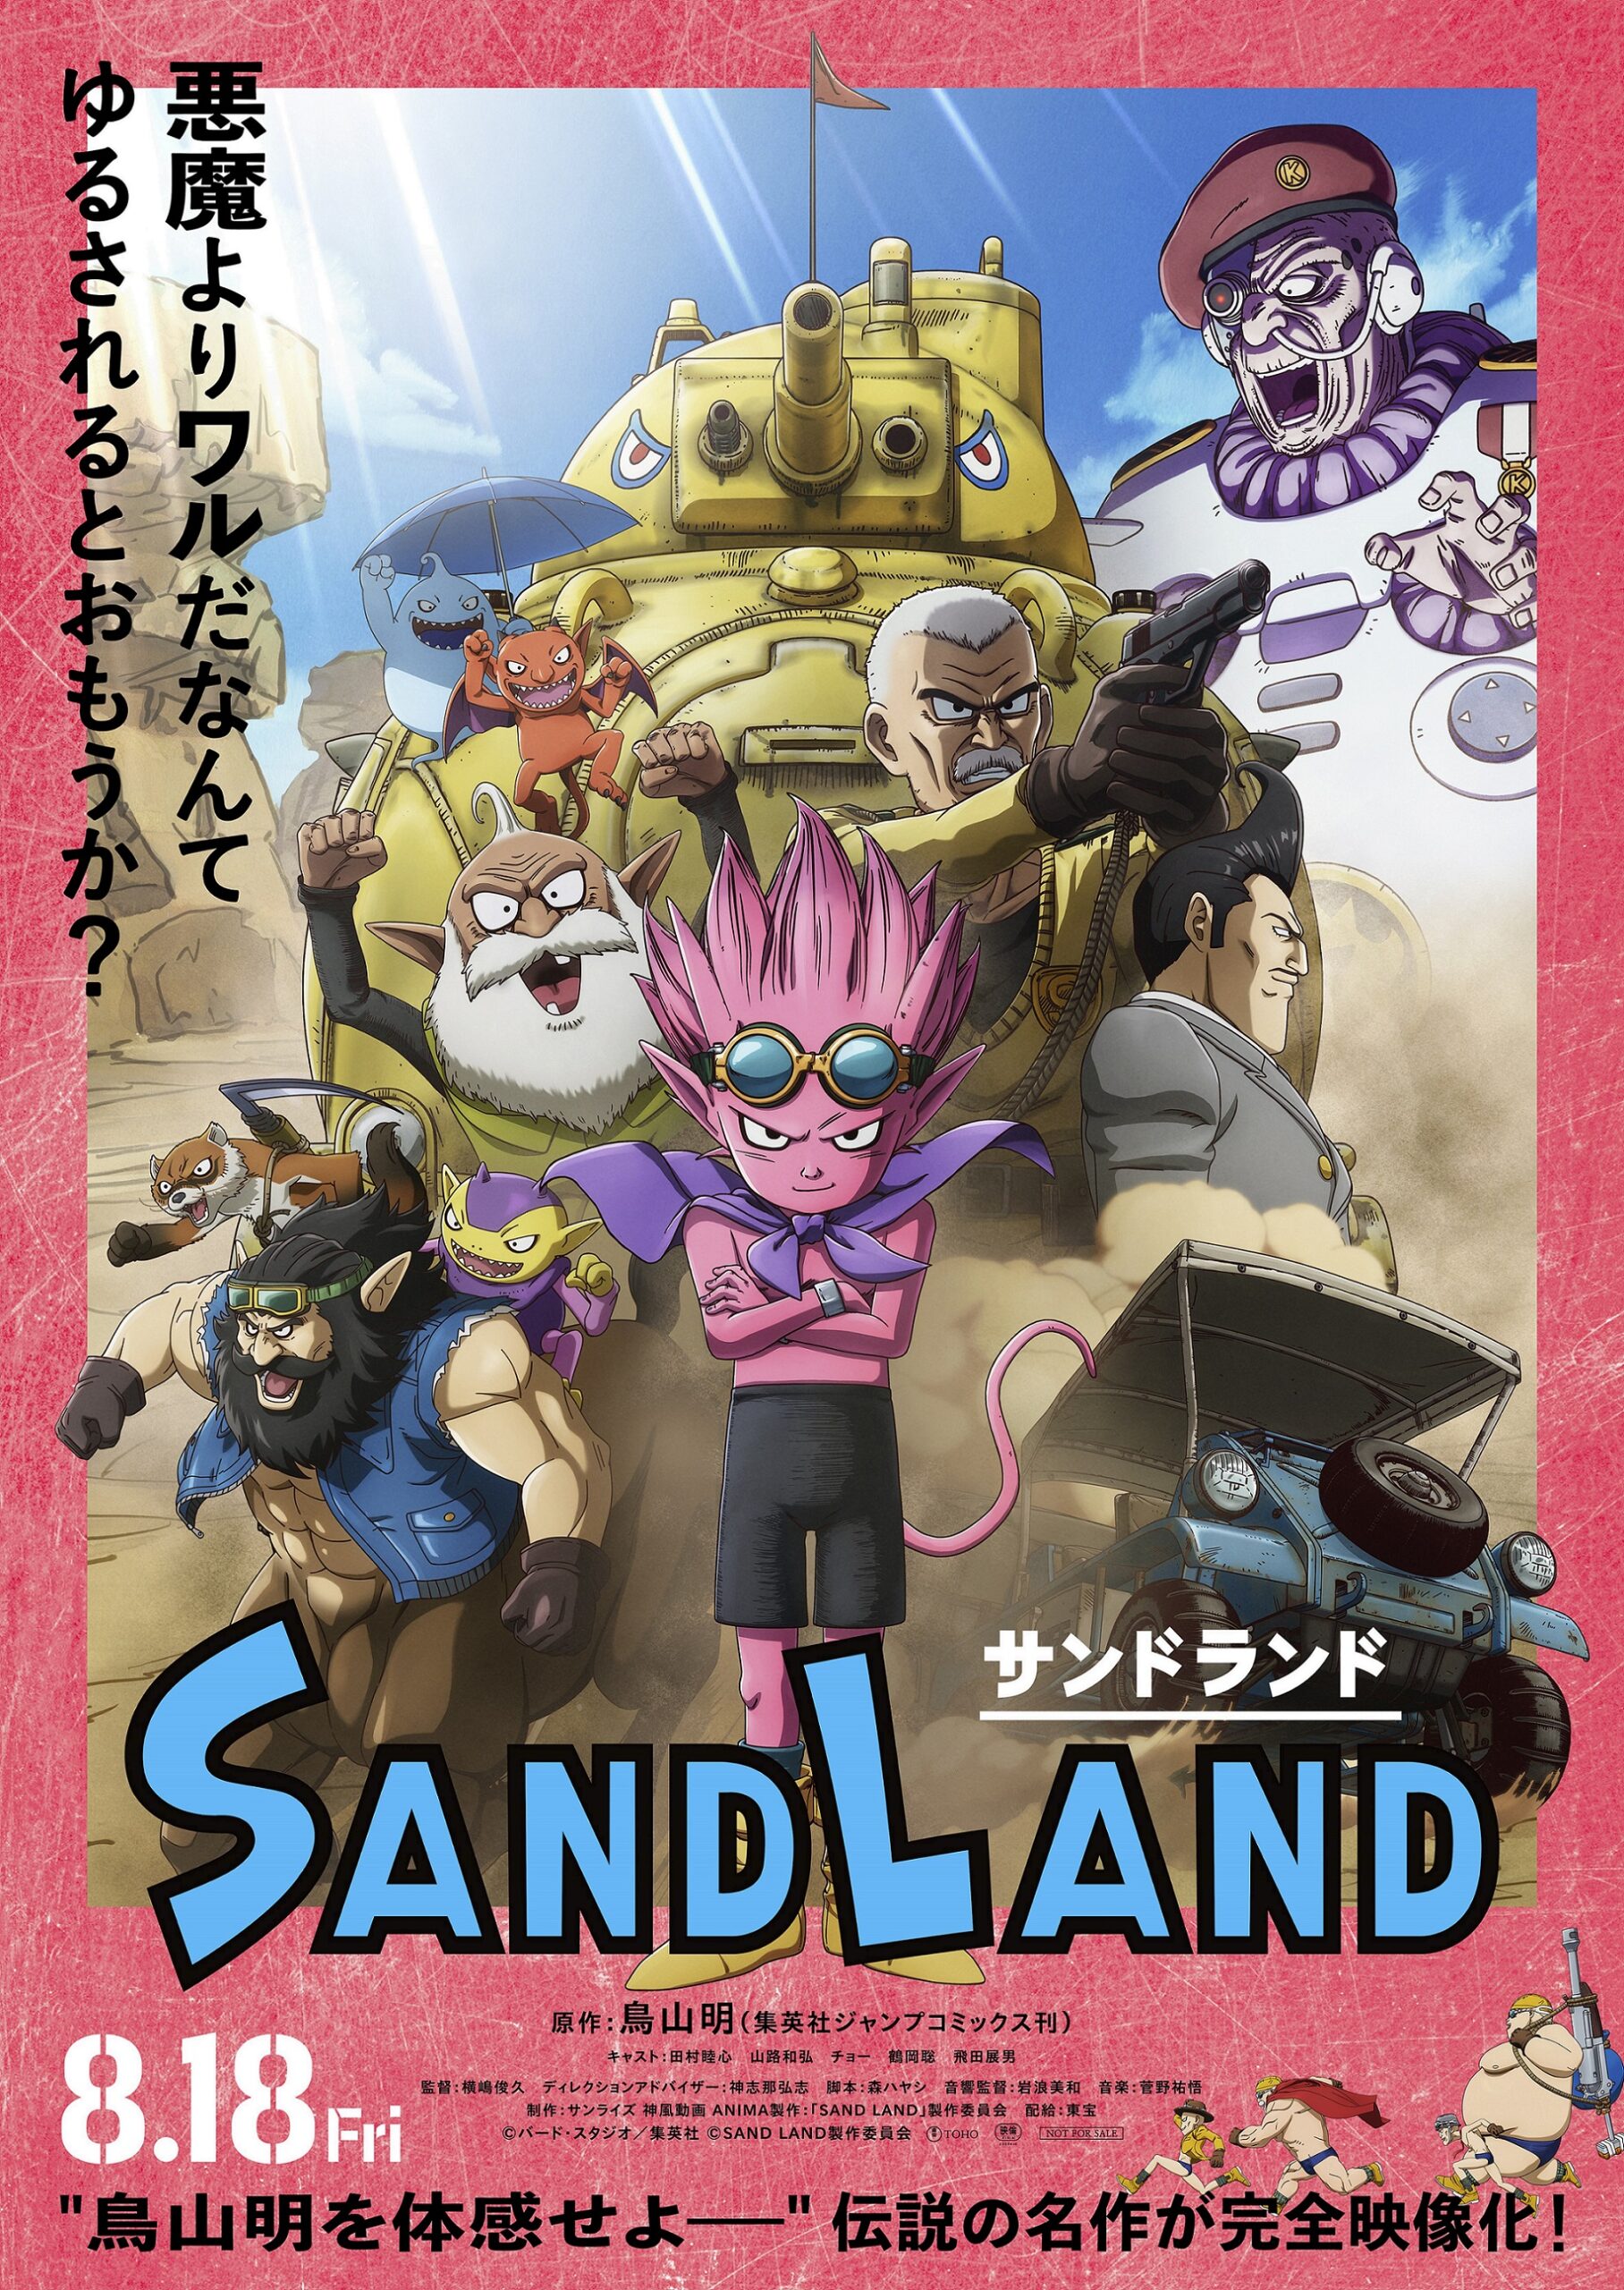 Sand Land anime movie